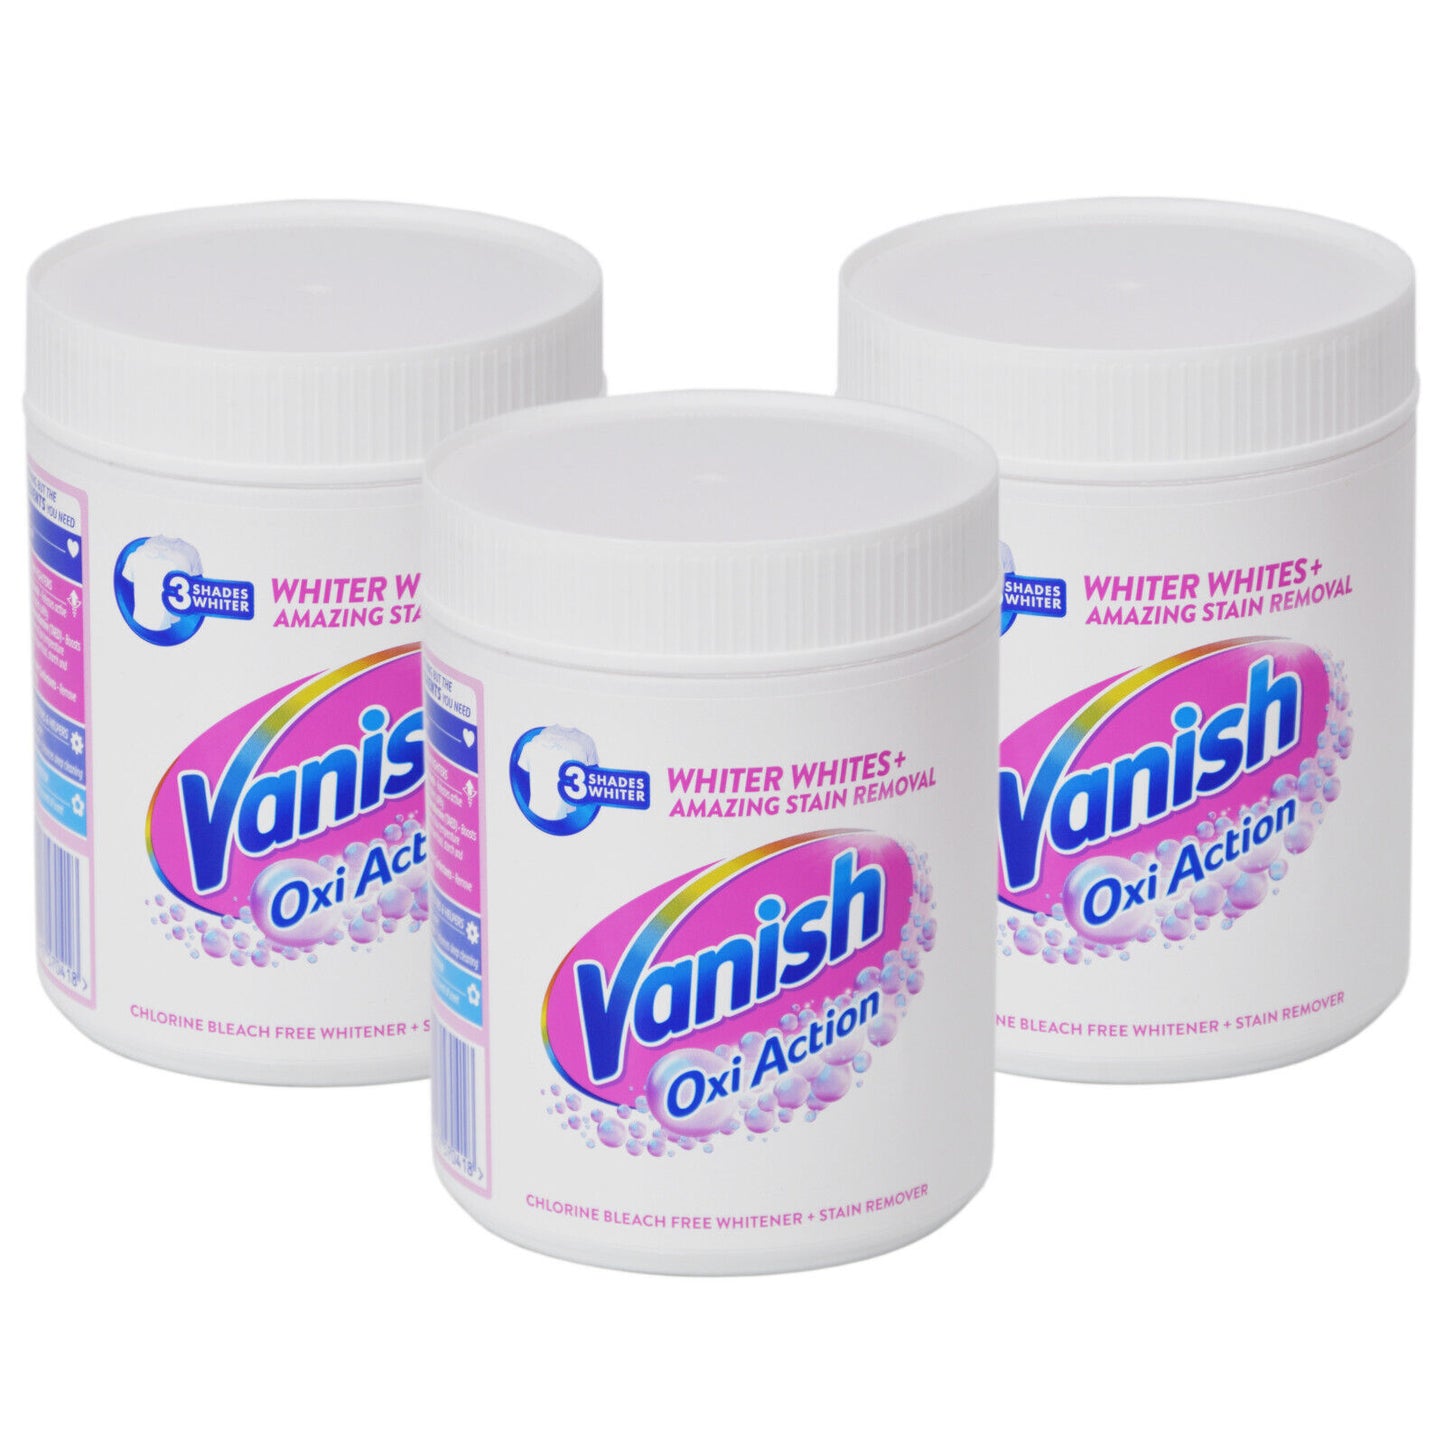 3x Vanish Oxi Action Chlorine Bleach Free Whitener + Stain Remover Powder 470g